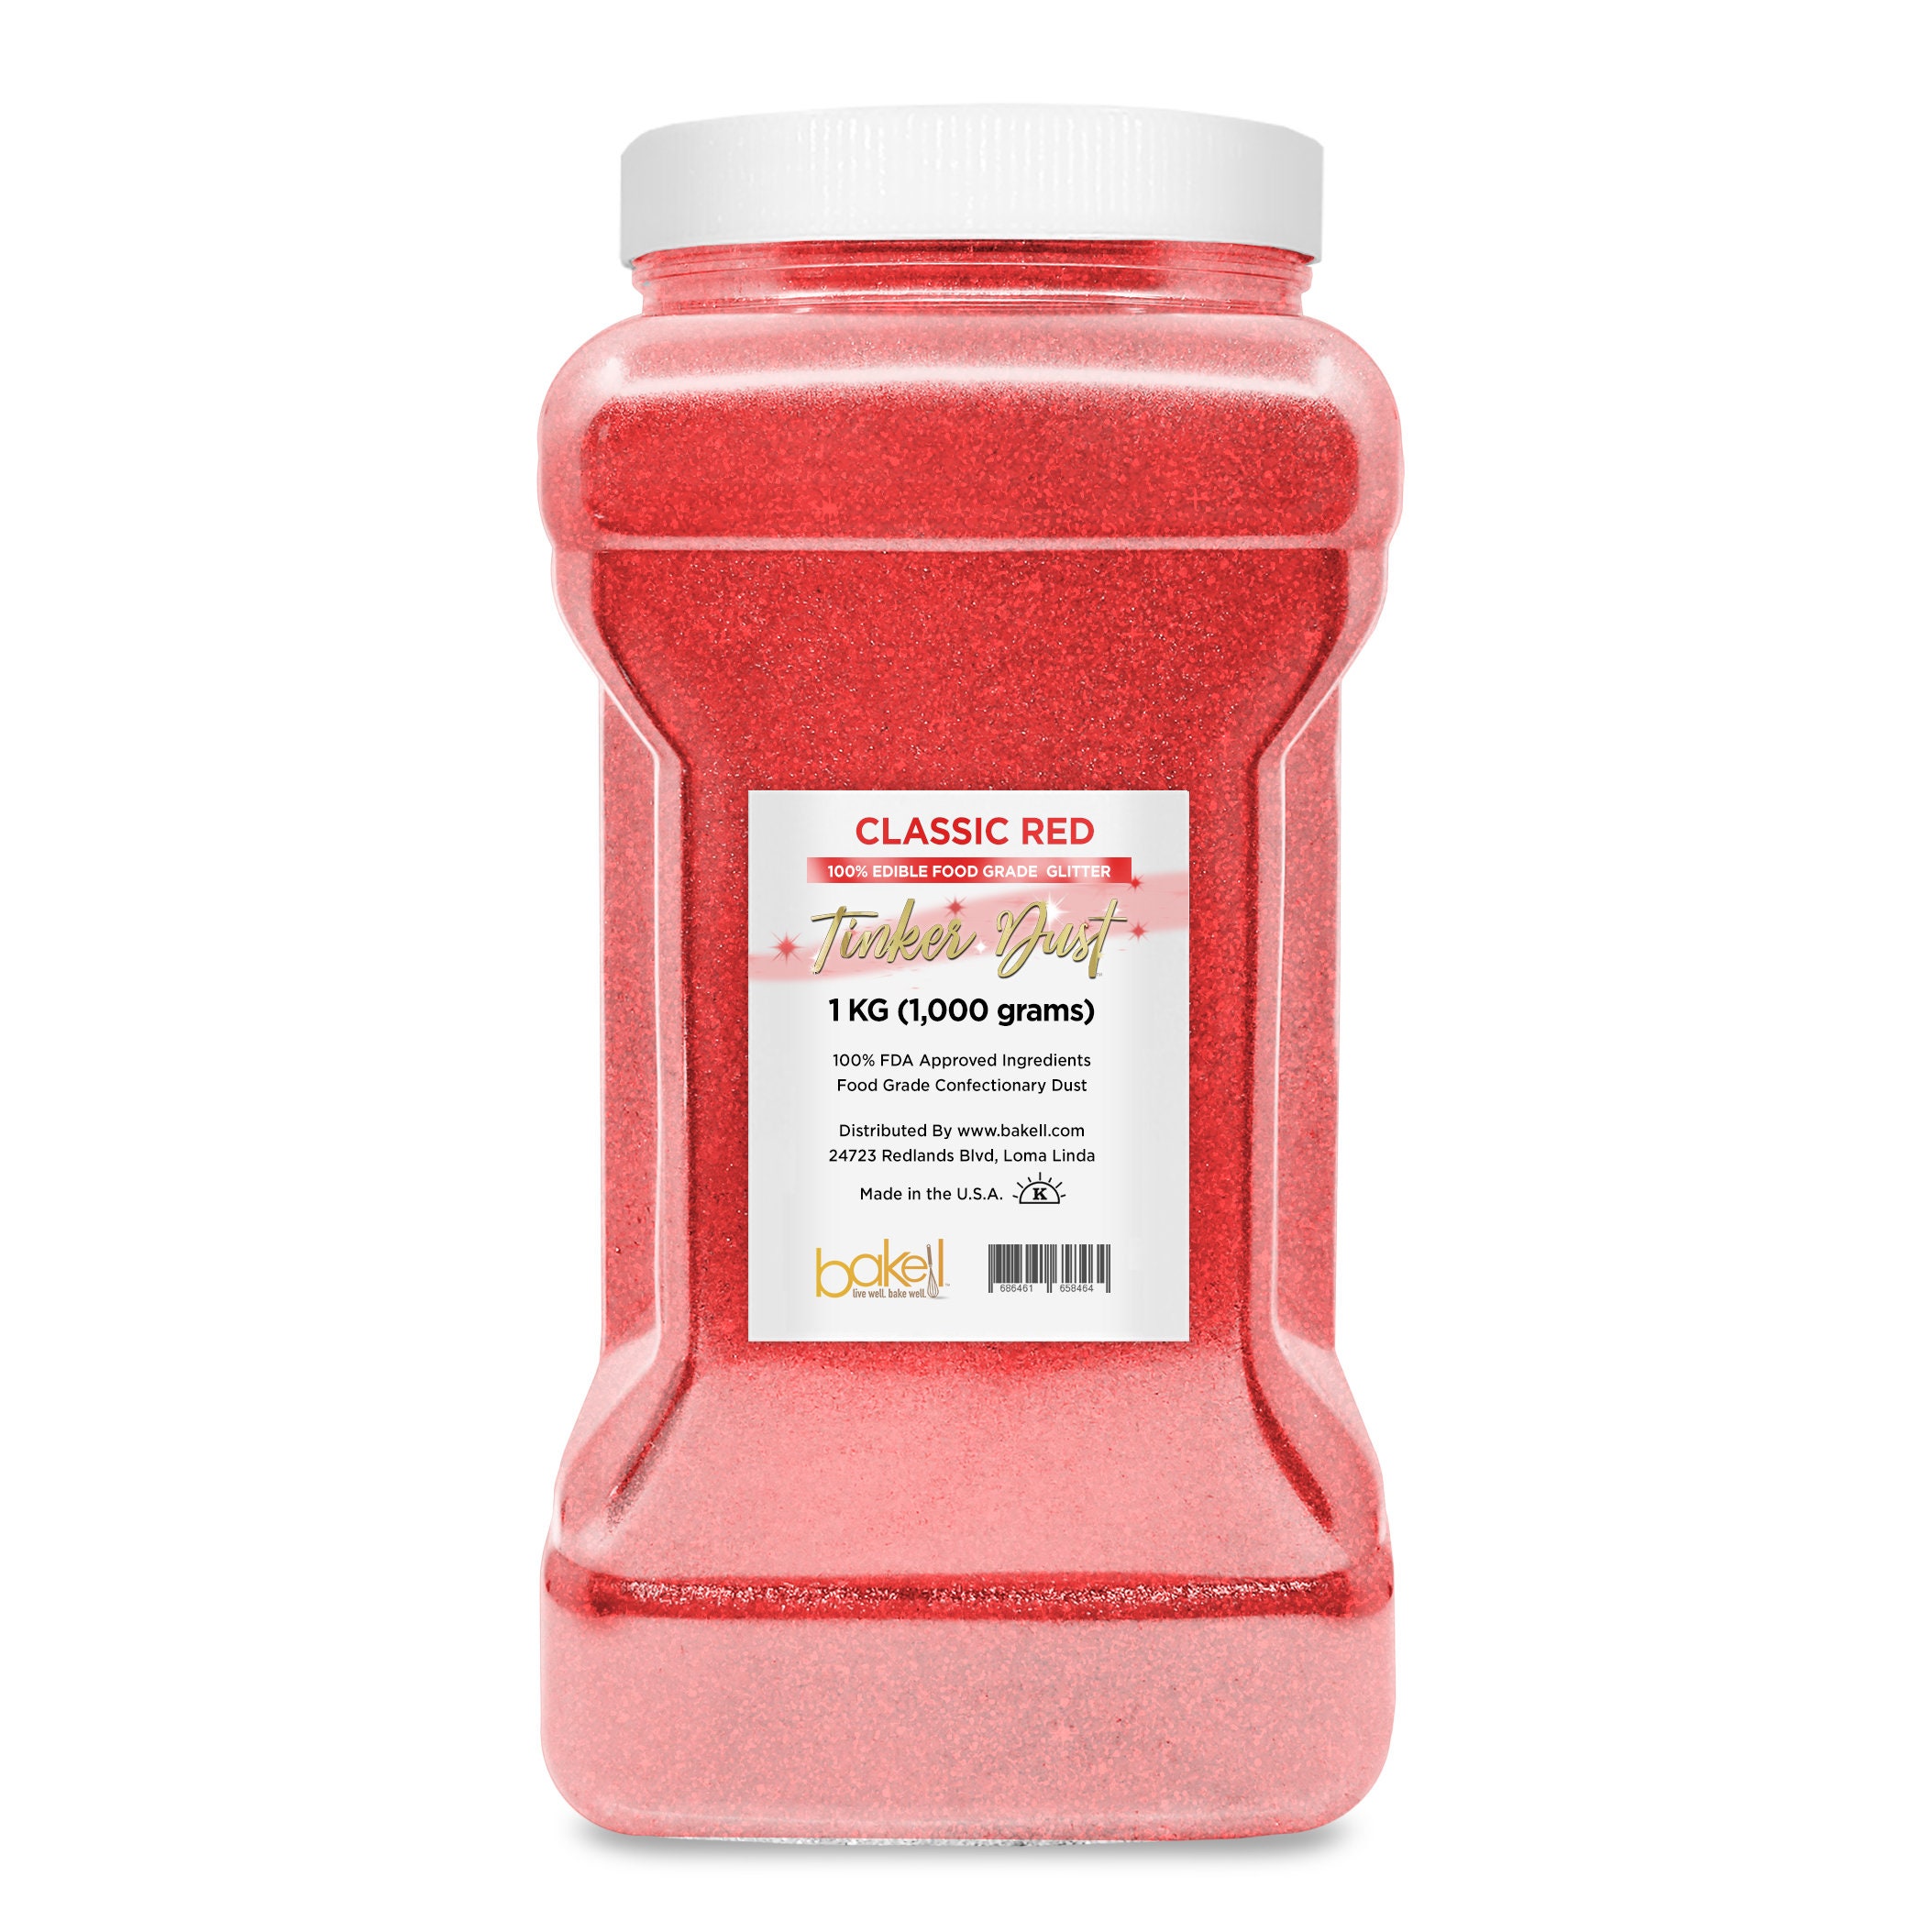  BAKELL Classic Red Edible Glitter, 25 Grams, TINKER DUST Edible  Glitter, KOSHER Certified, 100% Edible Glitter